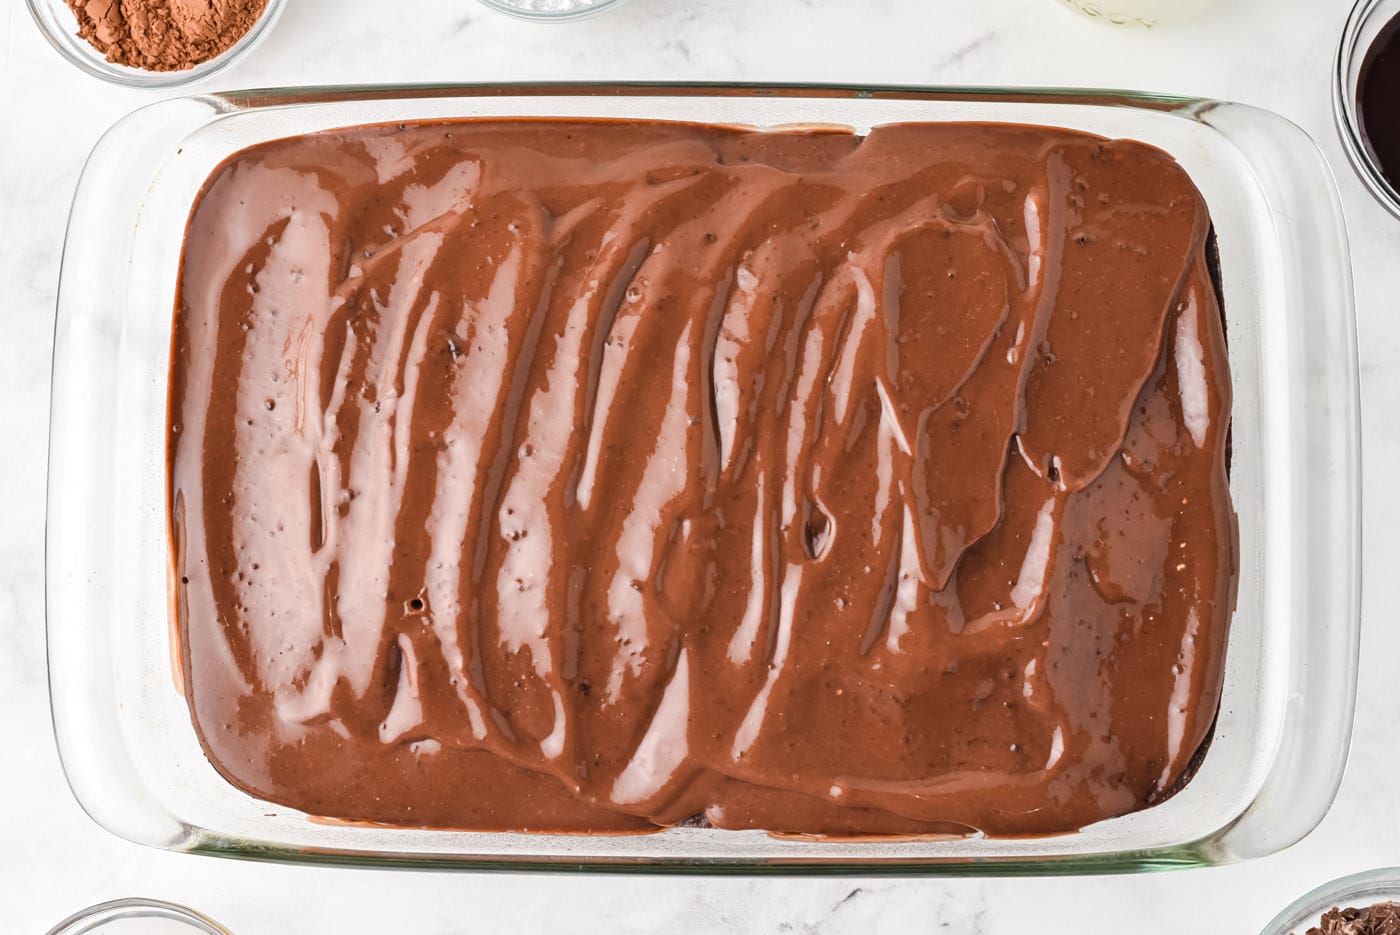 chocolate pudding on top of poke cake